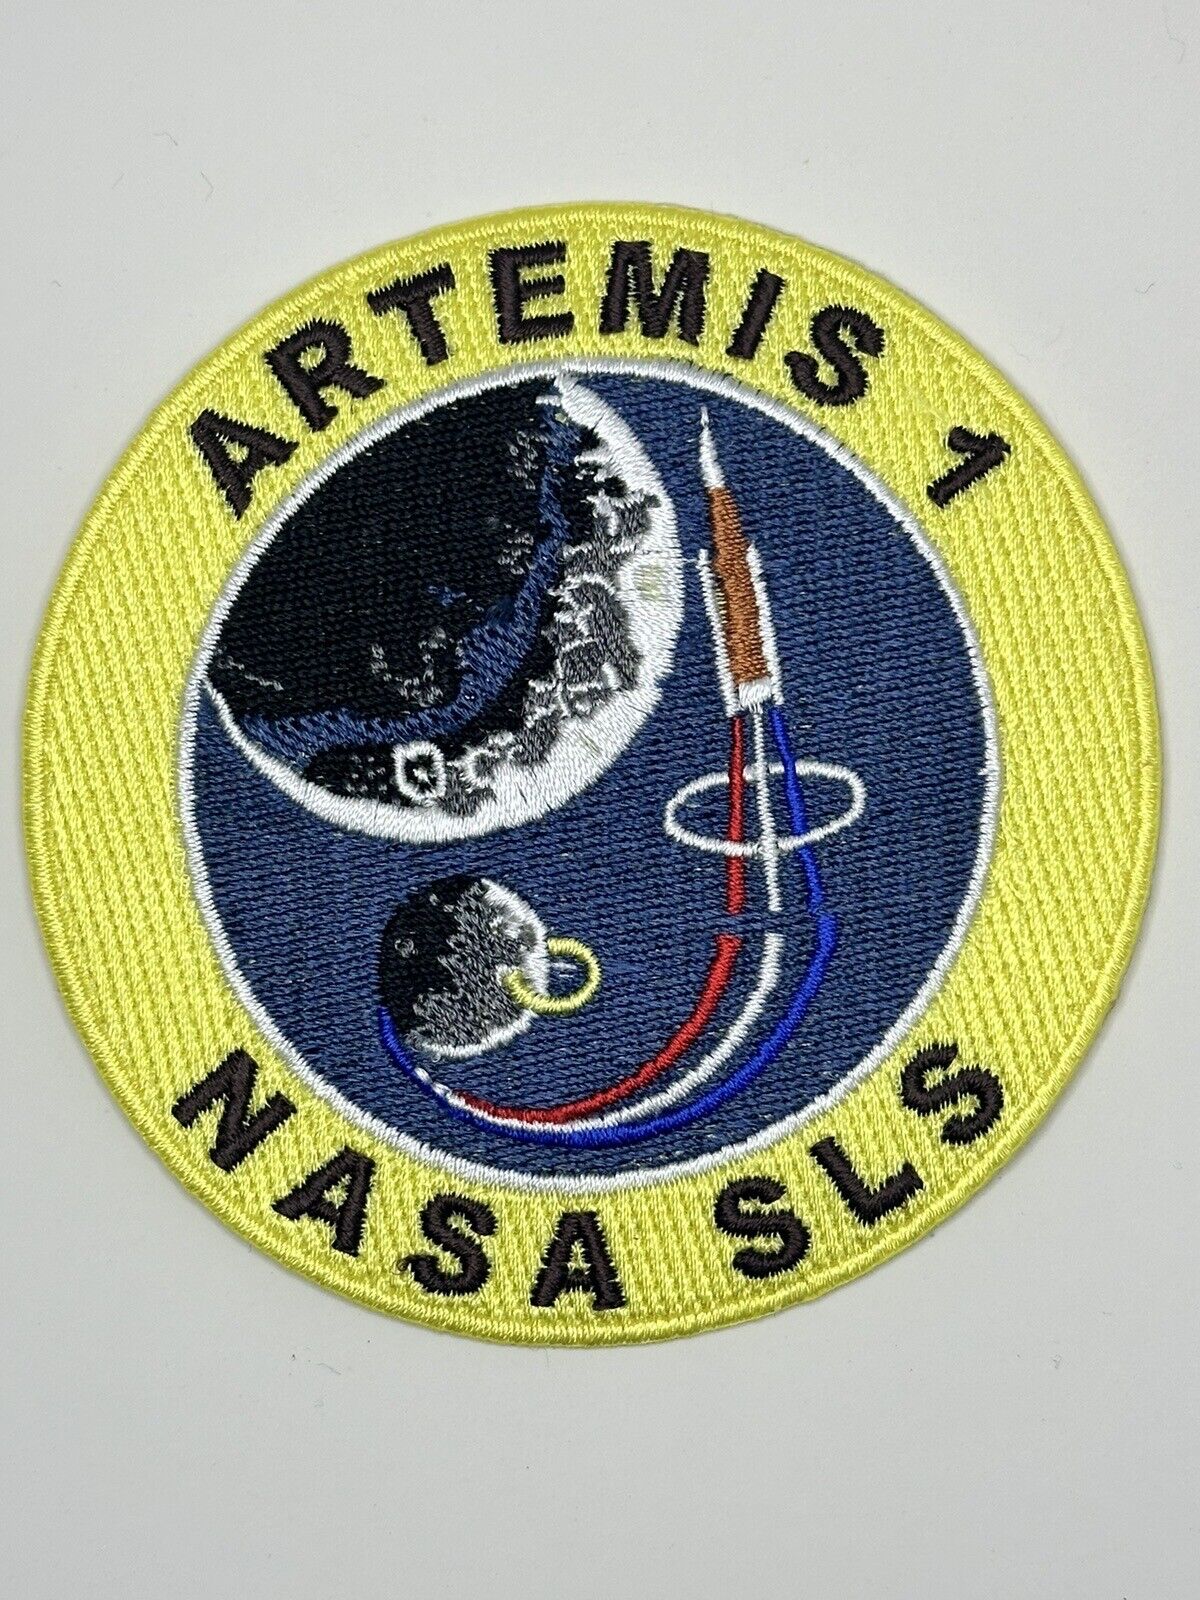 ARTEMIS 1 PROGRAM - NASA SLS TO THE MOON ASTRONAUT MISSION PATCH - 3.5”